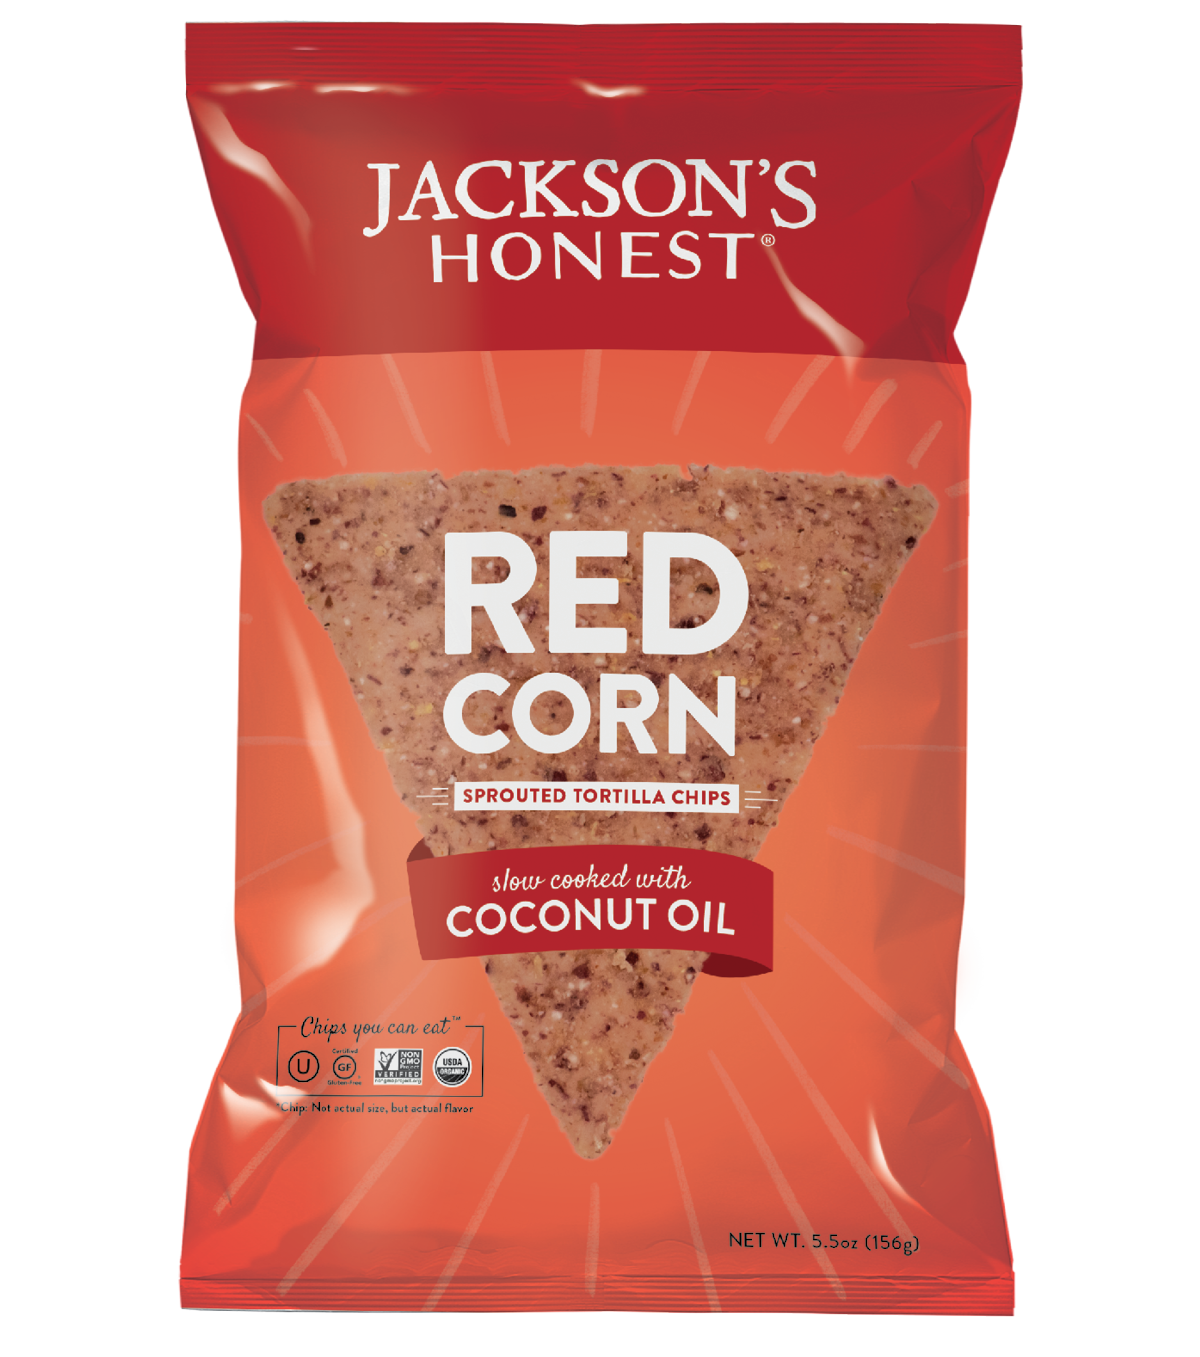 Jackson's Honest Packaging by Megan Hillman